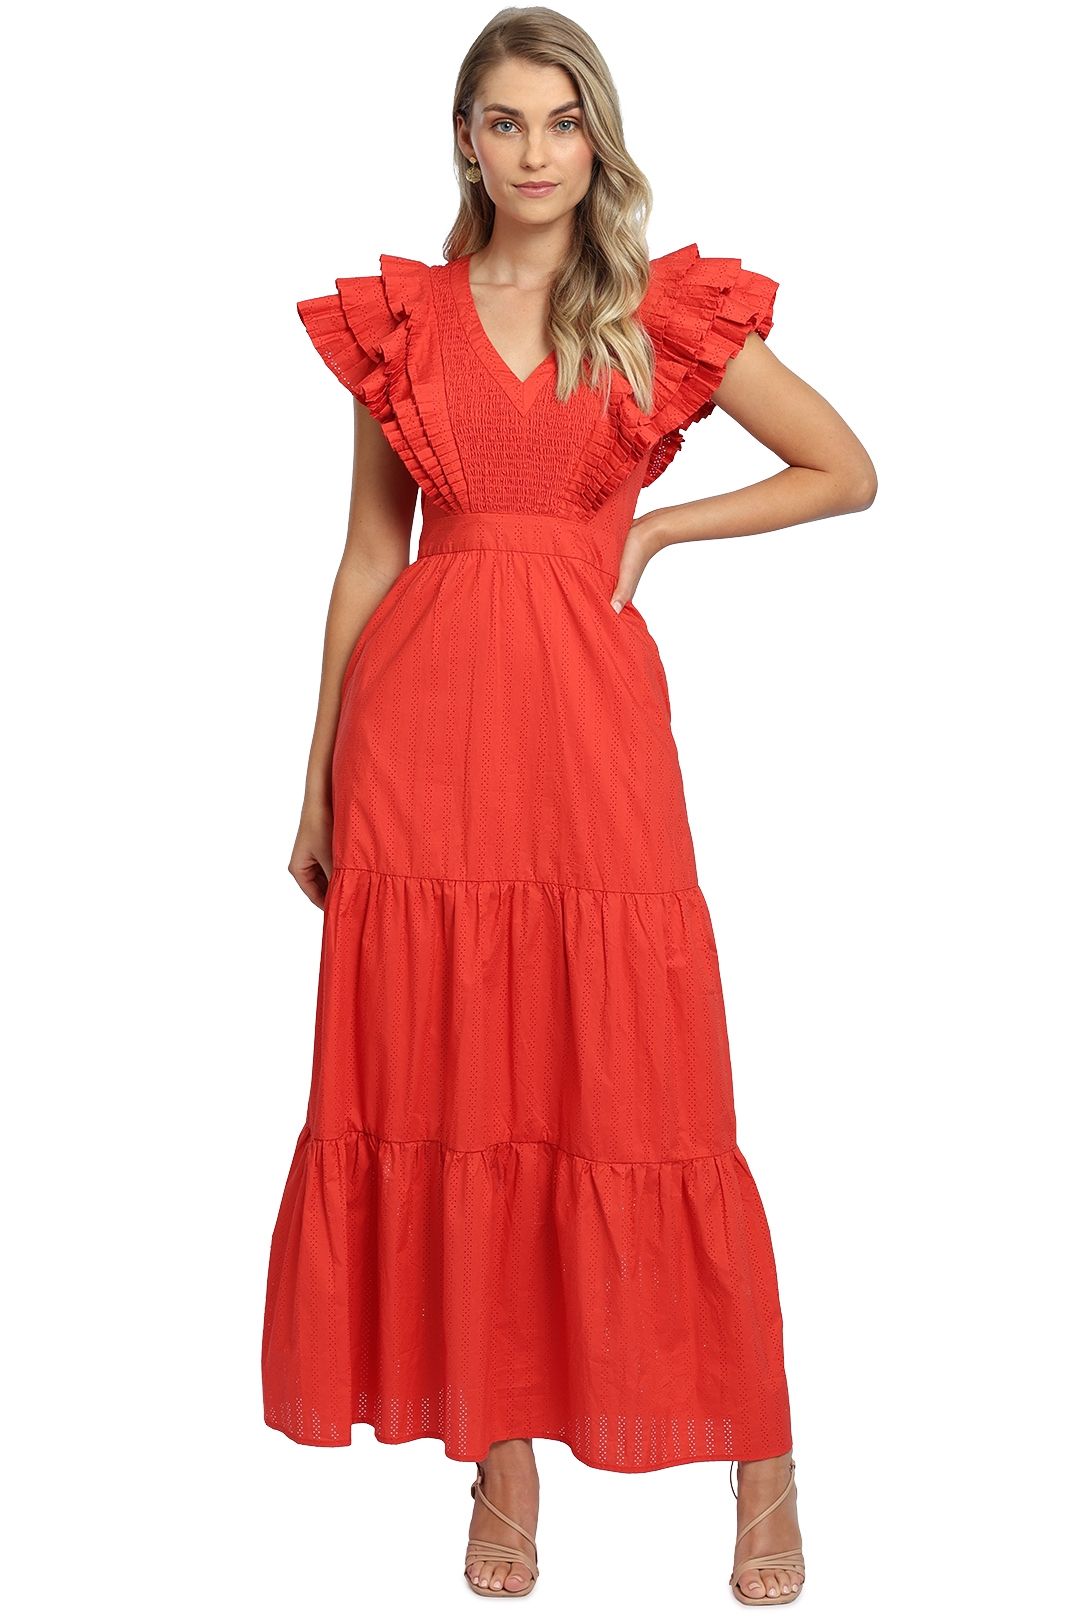 Morrison Luella Dress red